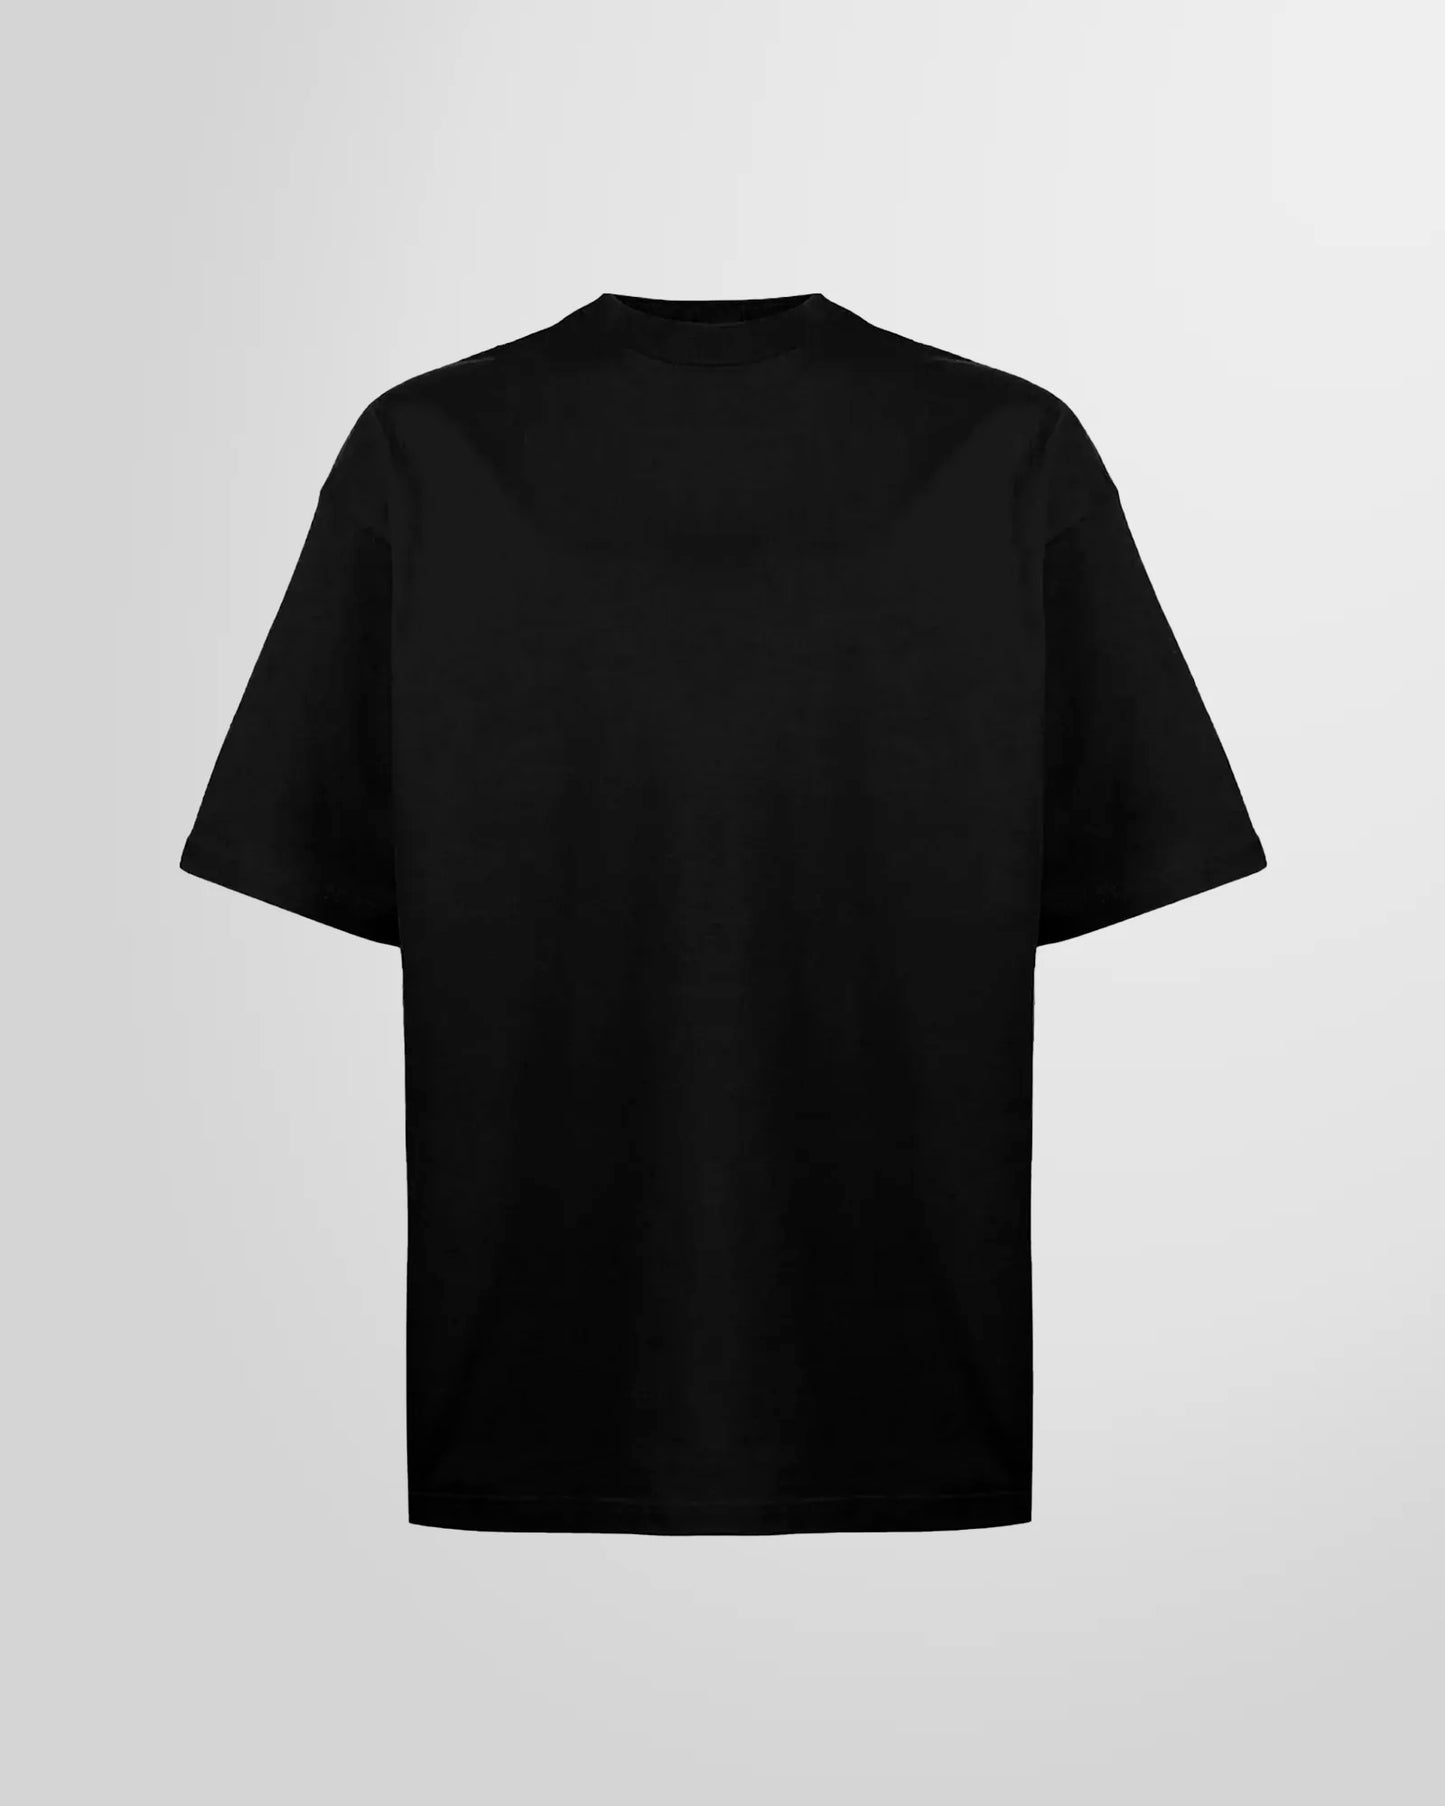 Celesto Black Basic 1.0 T-Shirt